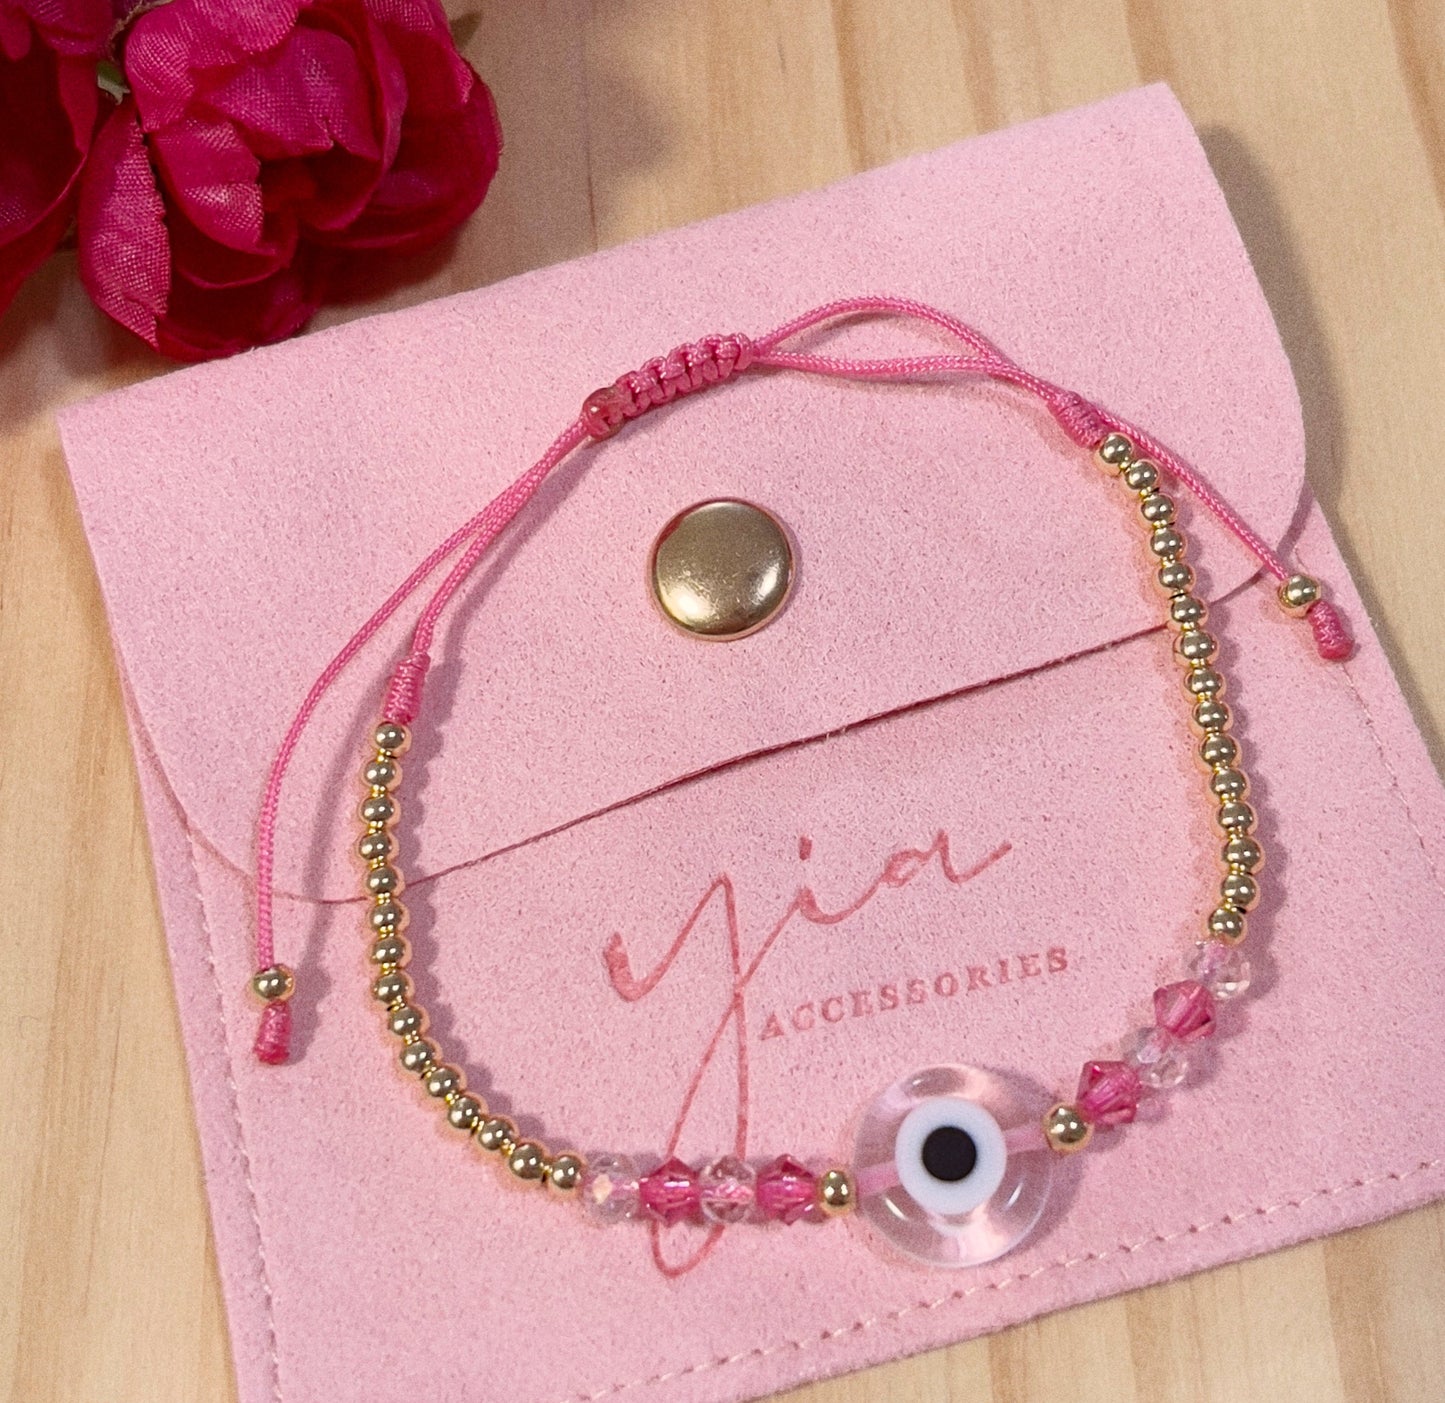 Ojito rosa & gold beads